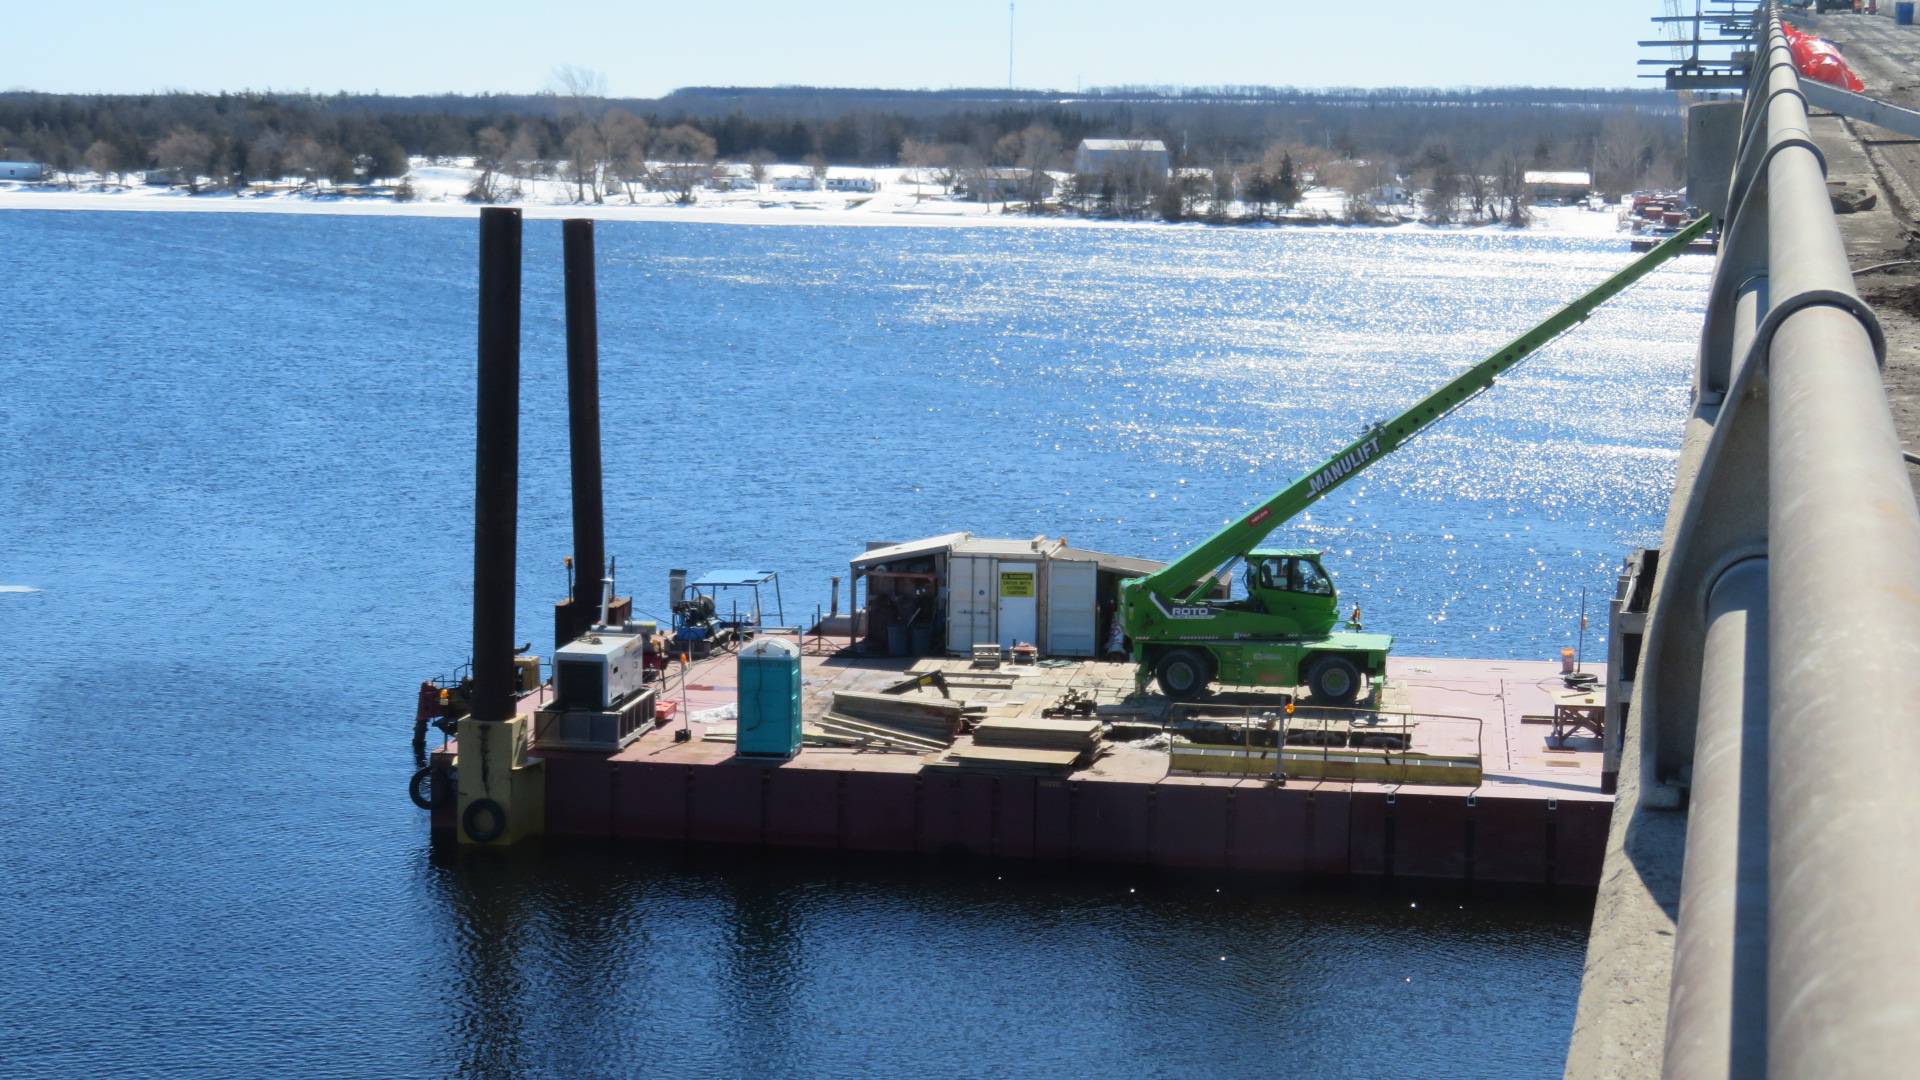 Manlift on the barge removing / installing false decking